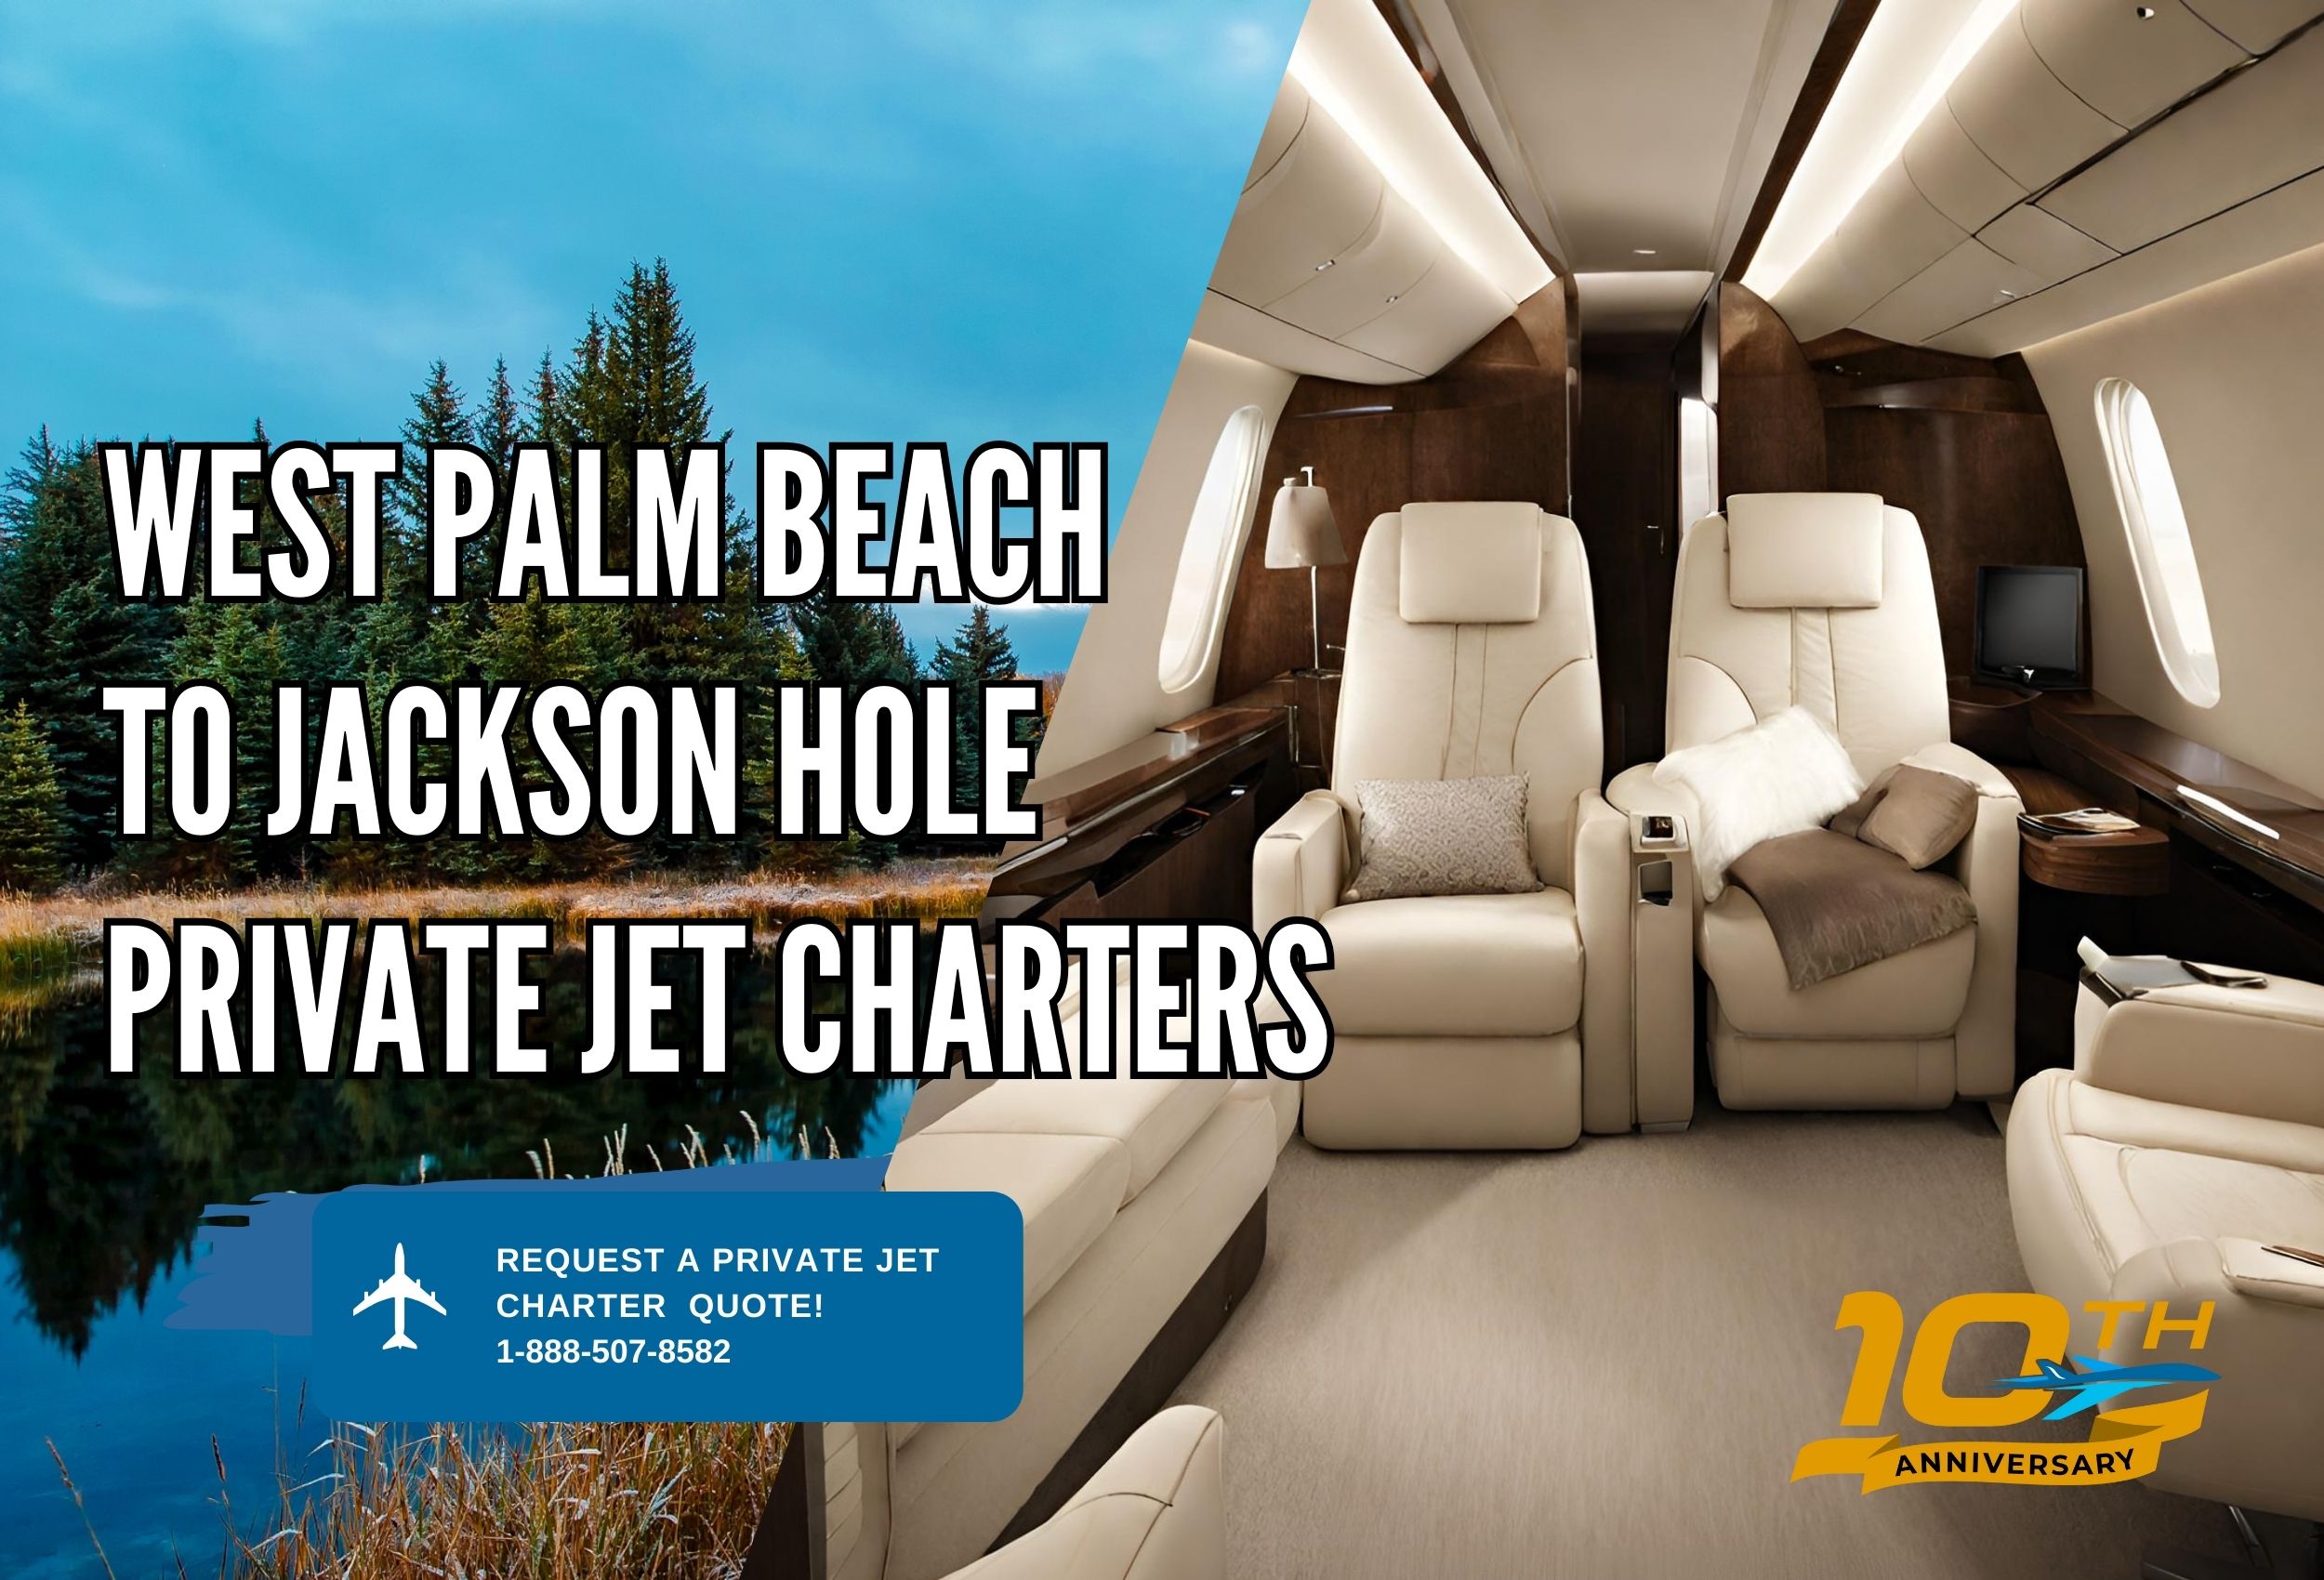 West Palm Beach to Jackson Hole Private Jet Charters